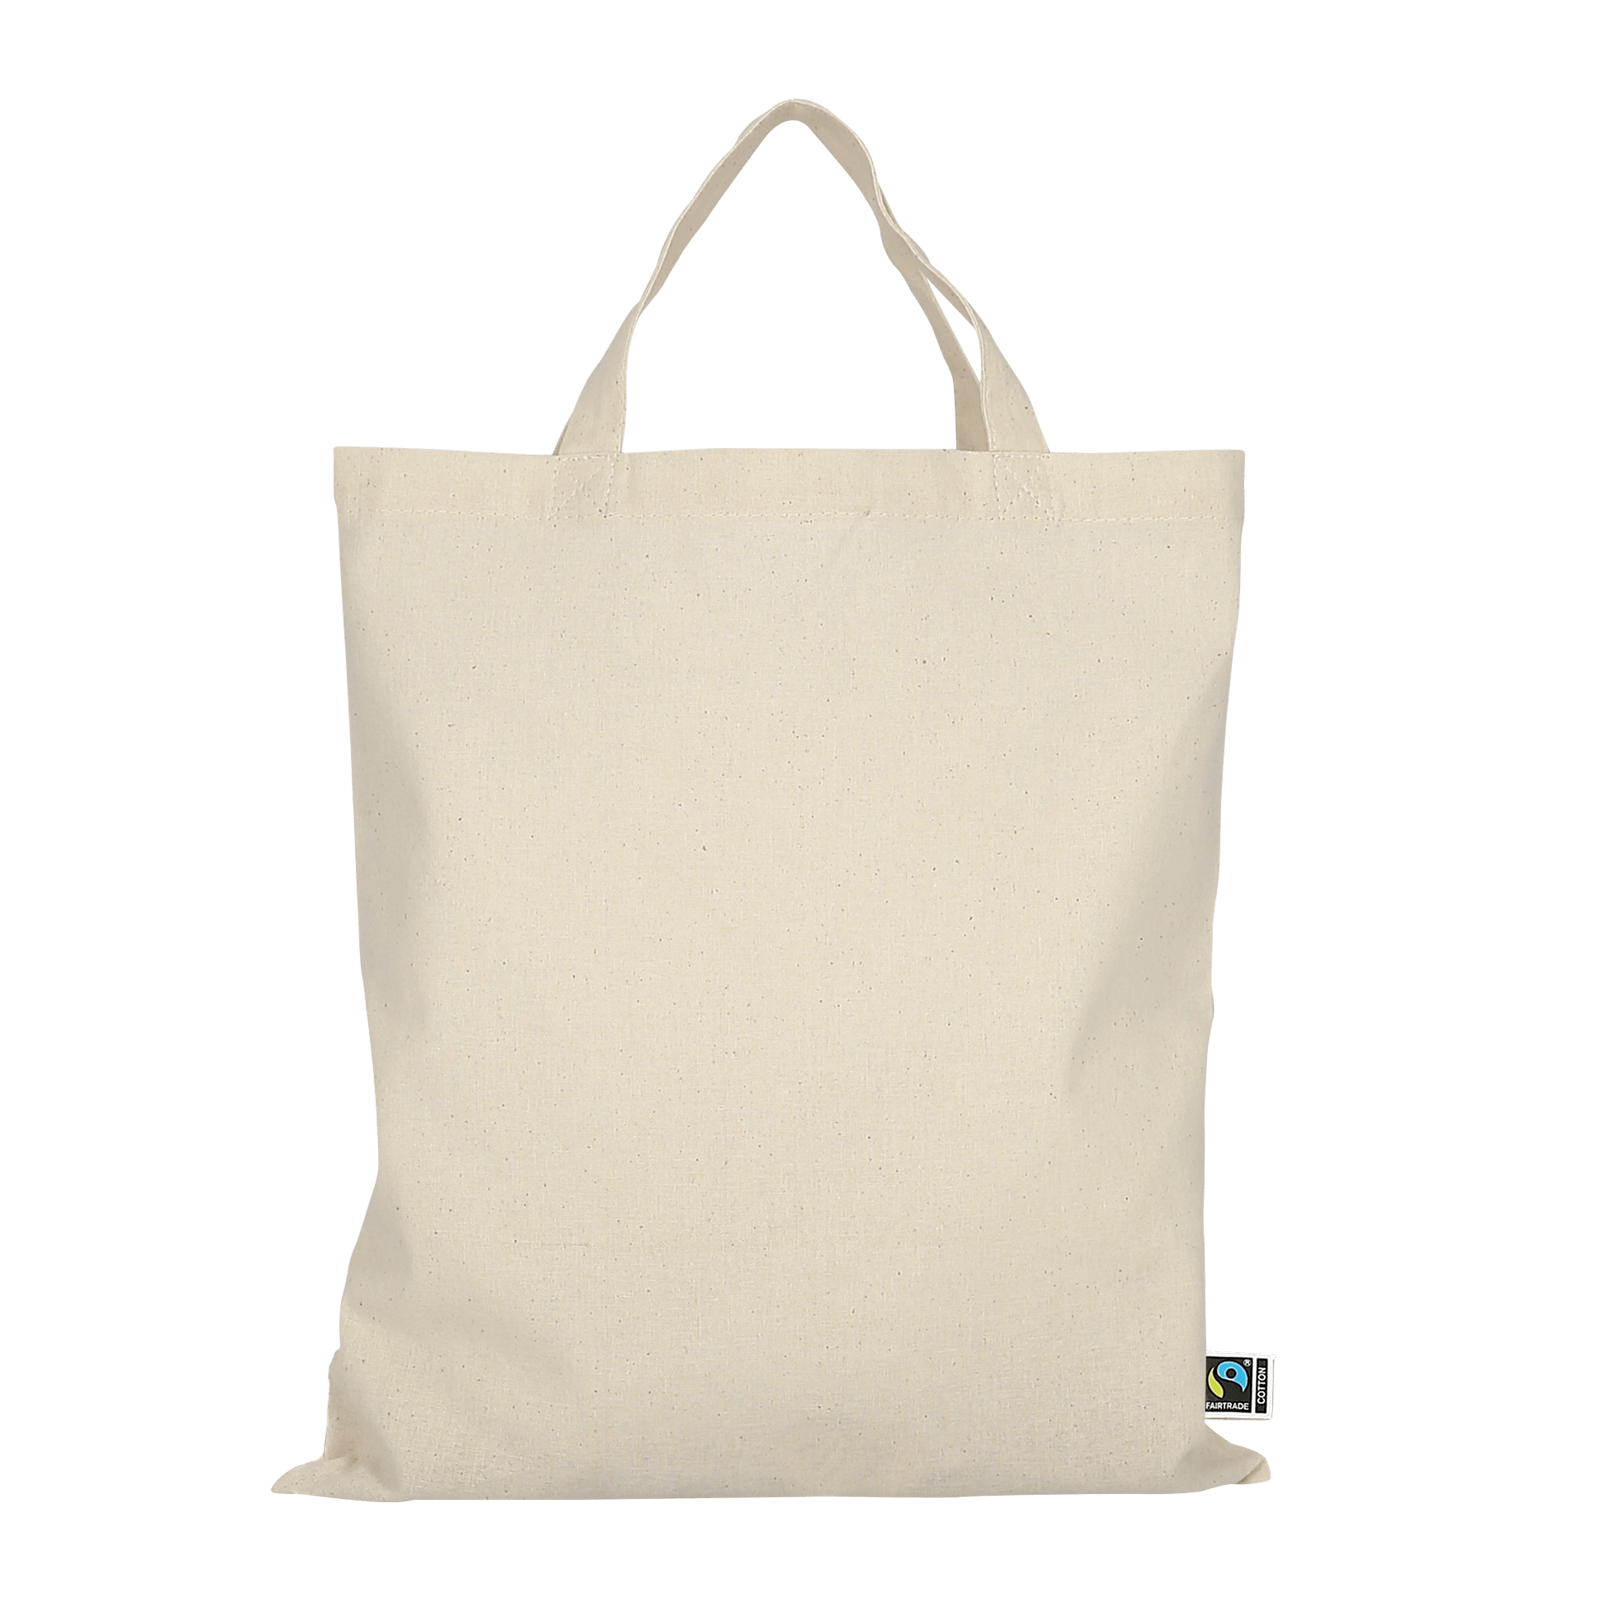 Texxilla Midi - Tasche aus Fairtrade-Baumwolle